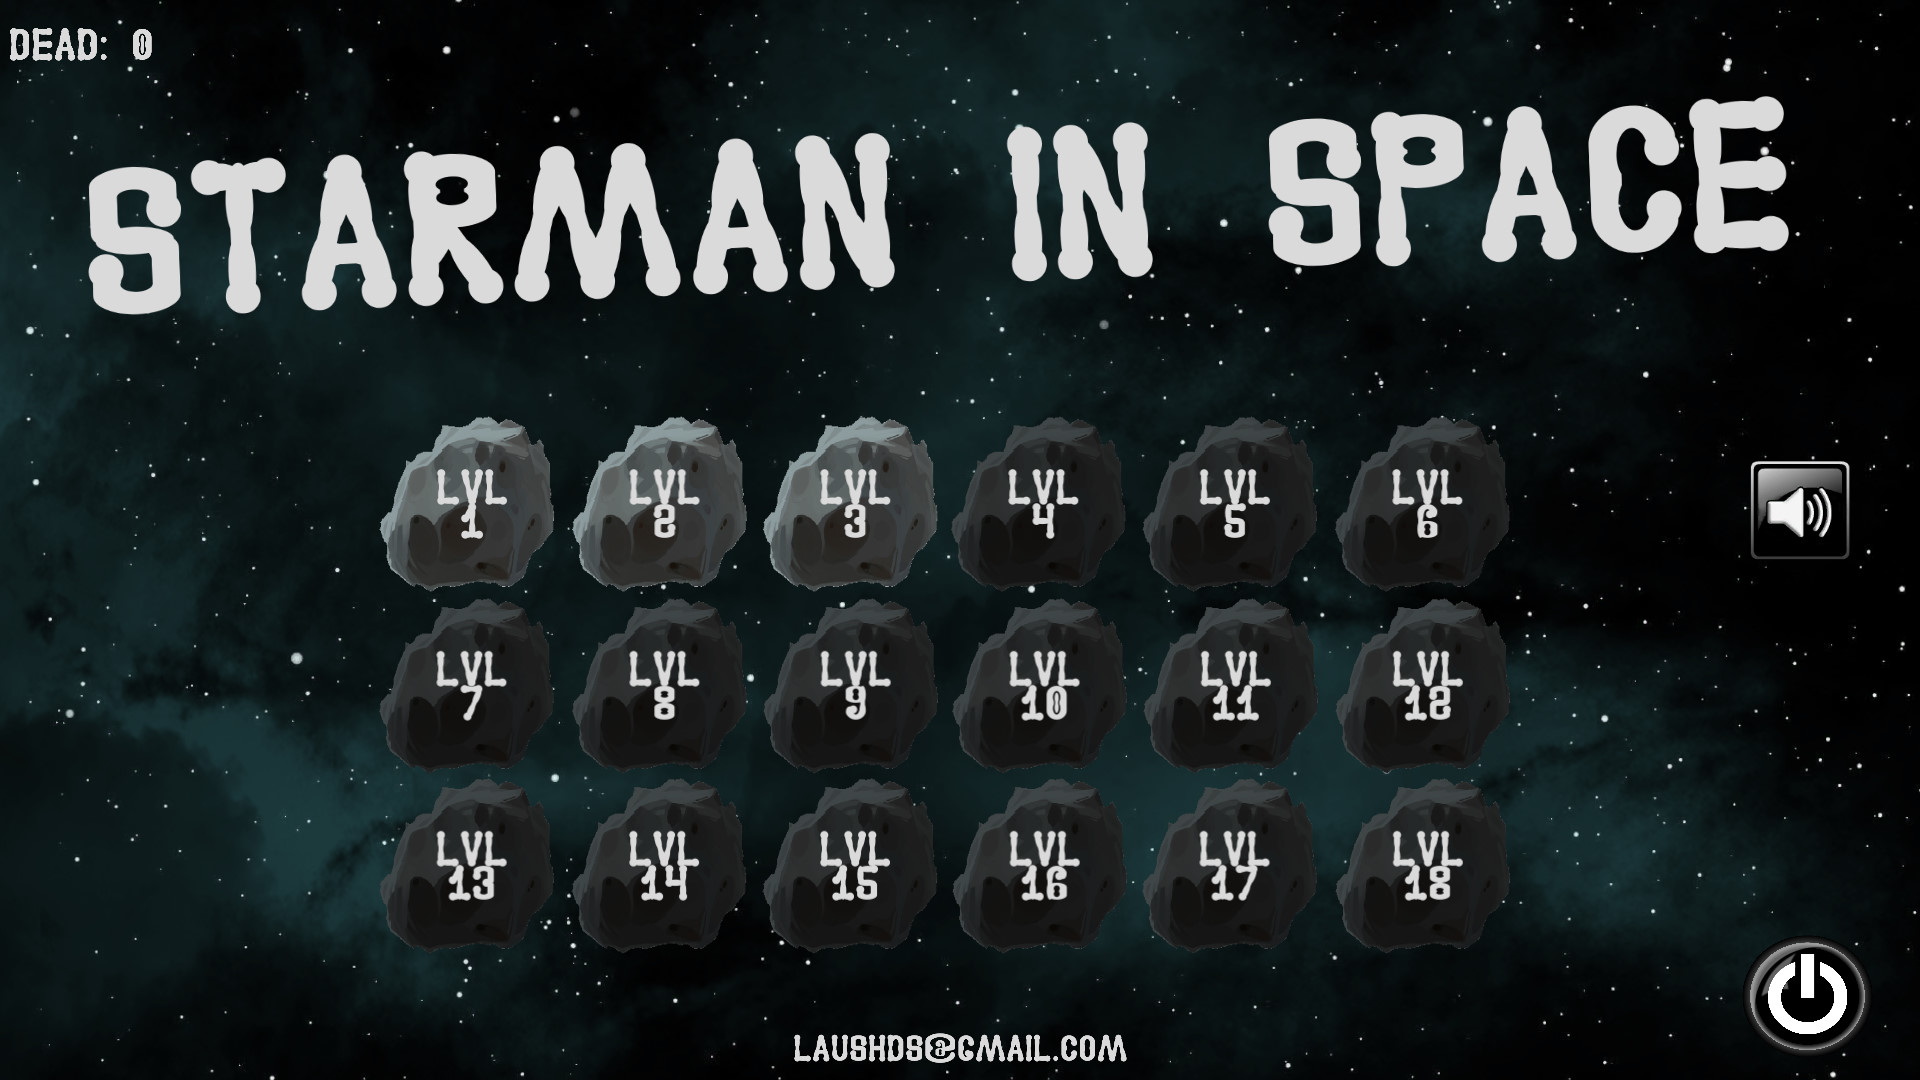 Starman In Space Steam CD Key